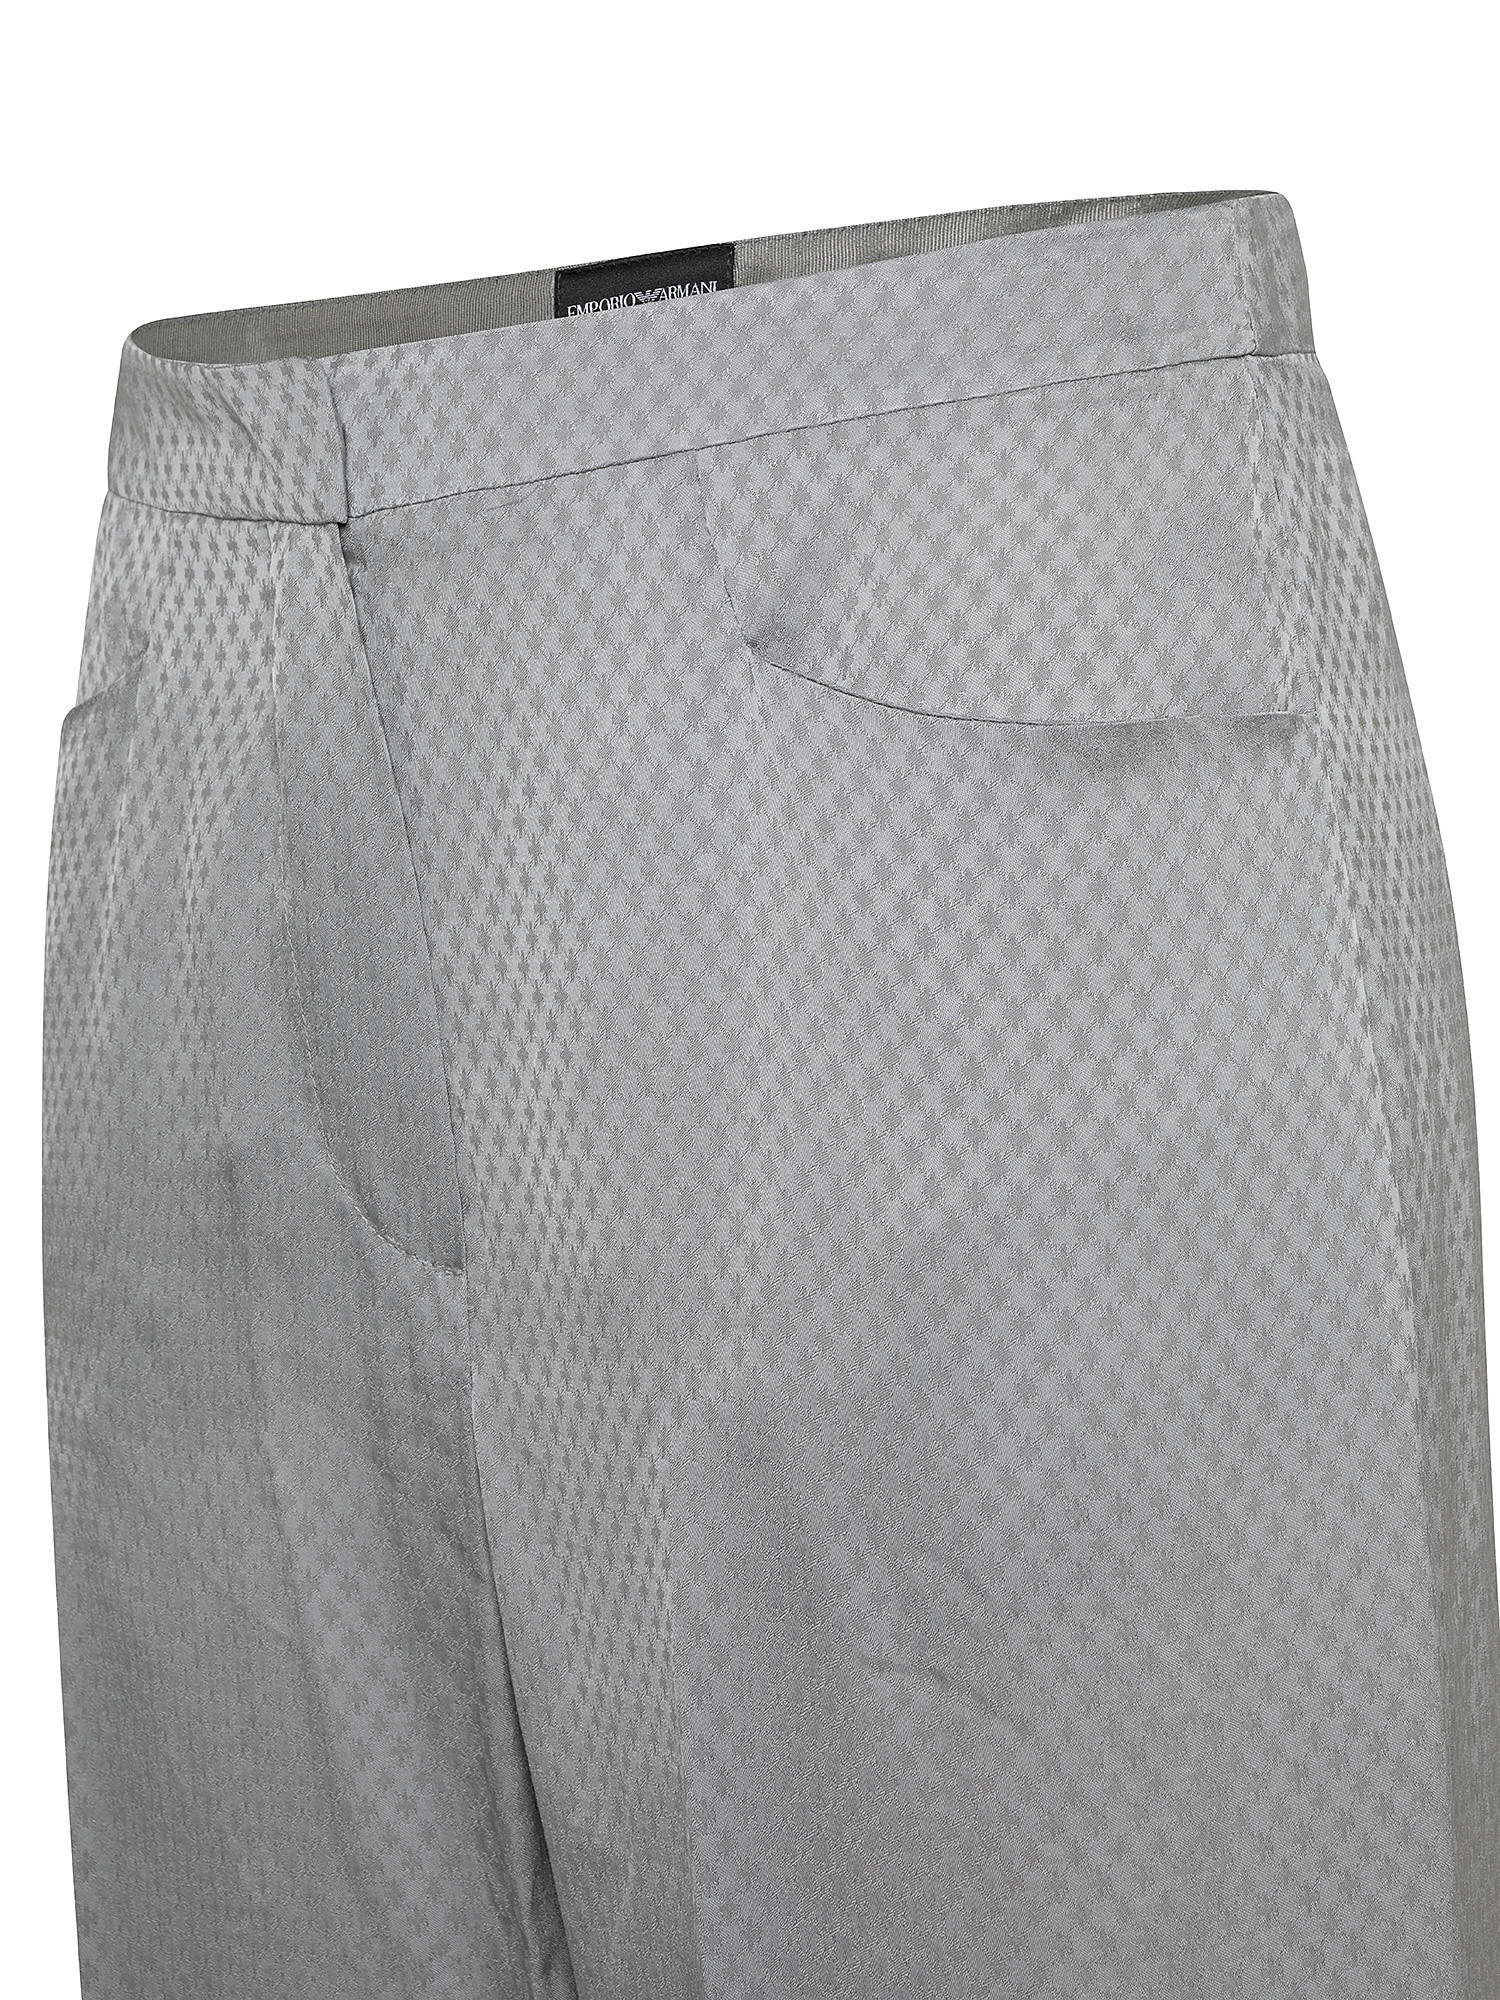 5-pocket trousers, Grey, large image number 2